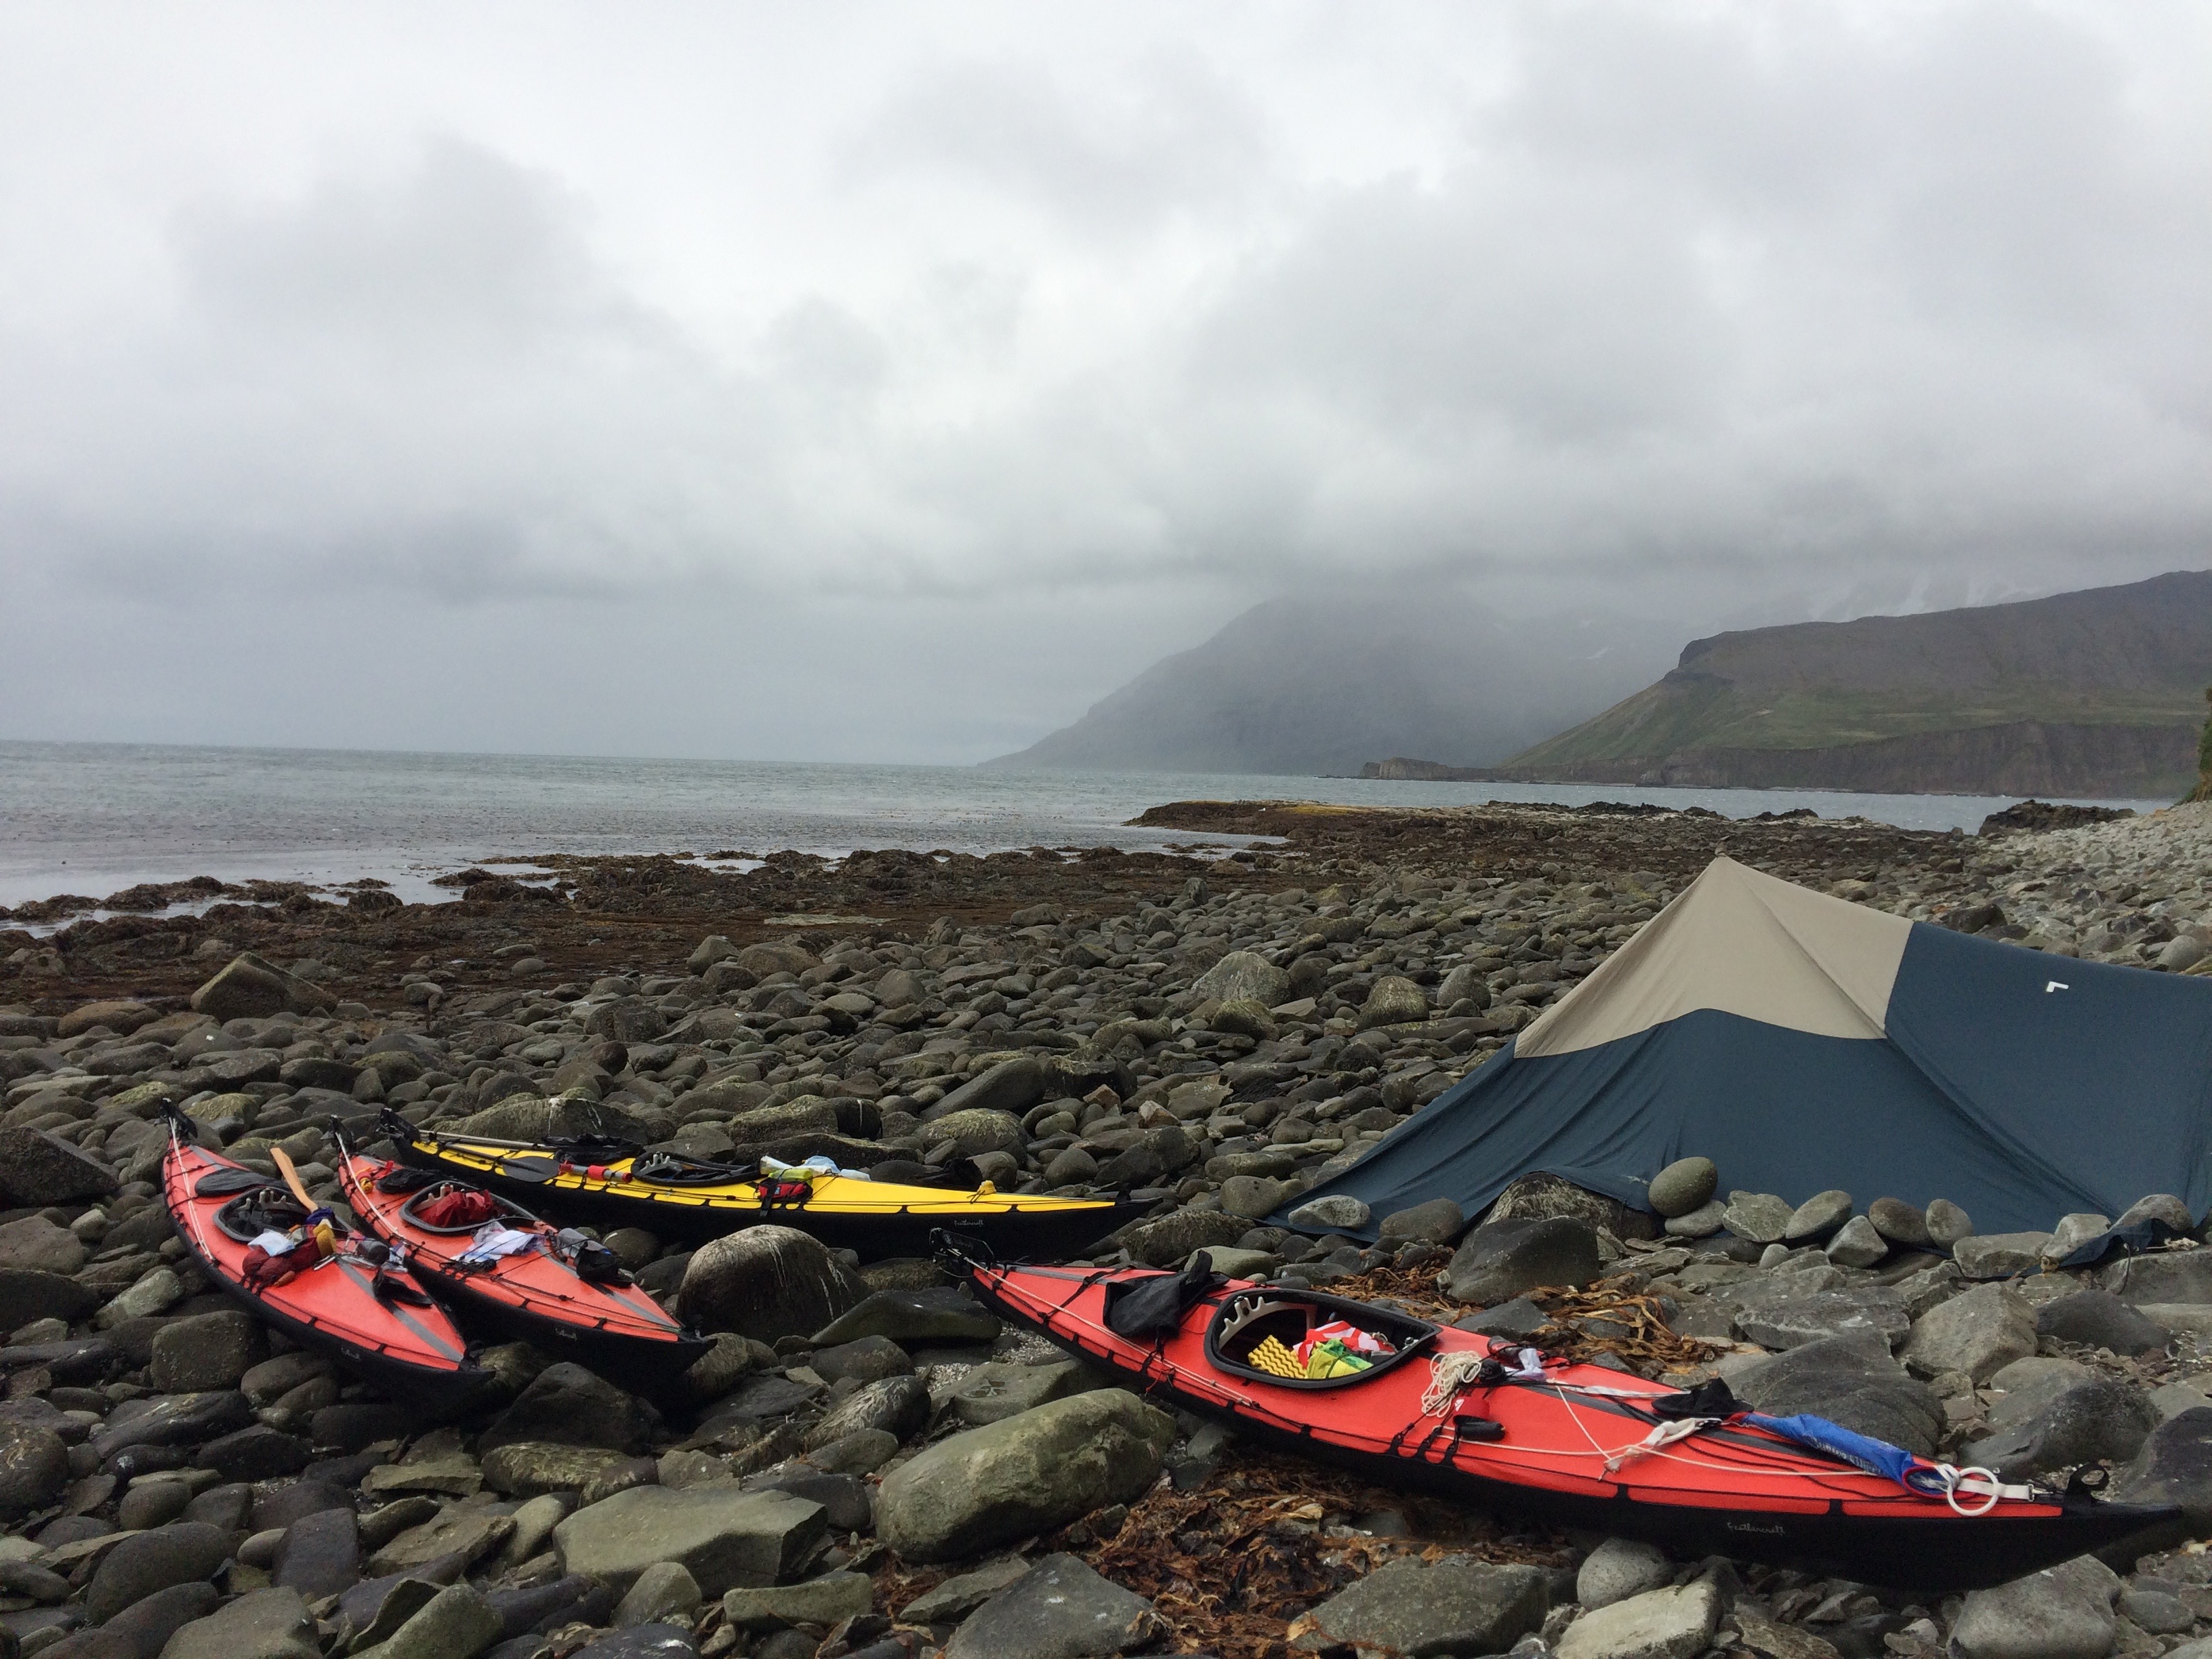 The kayak's used to go from Cold Bay to Unalaska (Photo courtesy of Takao Araiba)